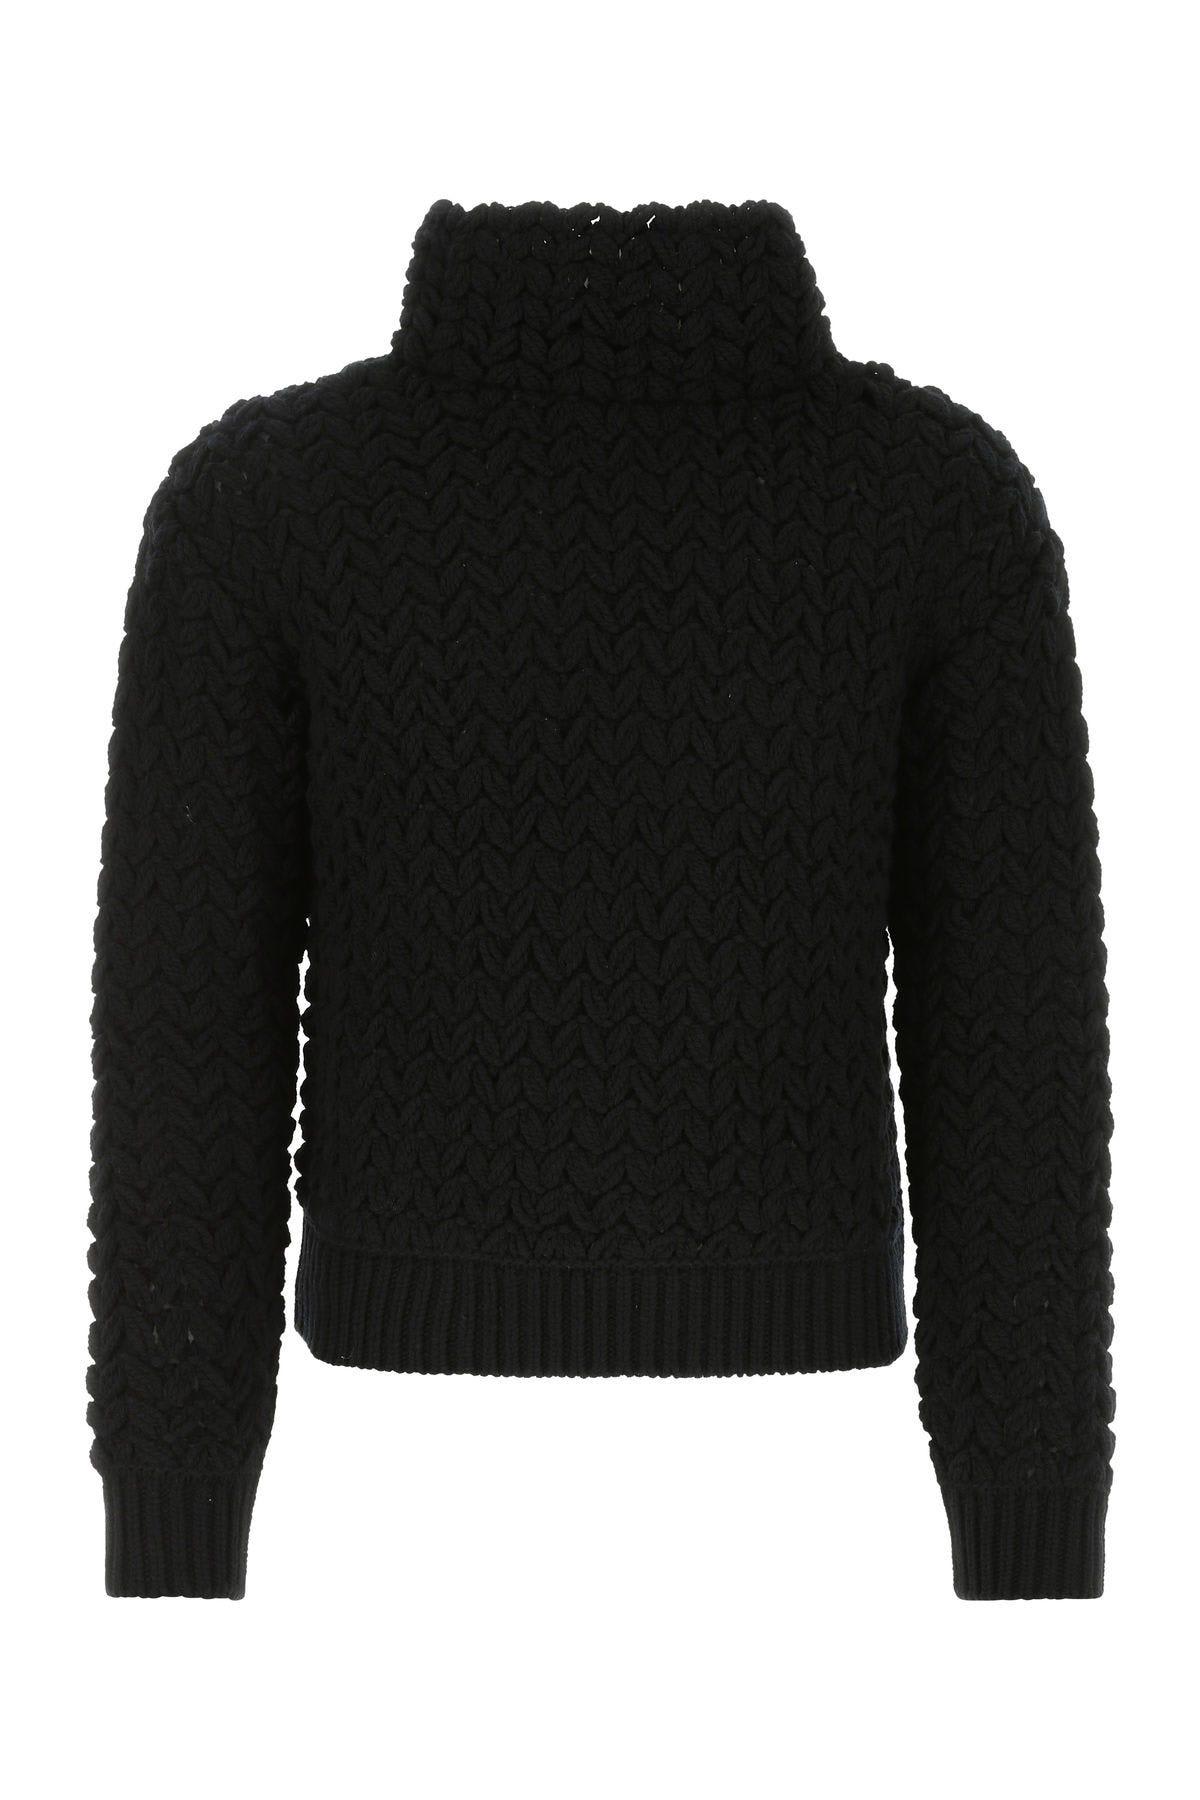 Valentino Black Wool Sweater